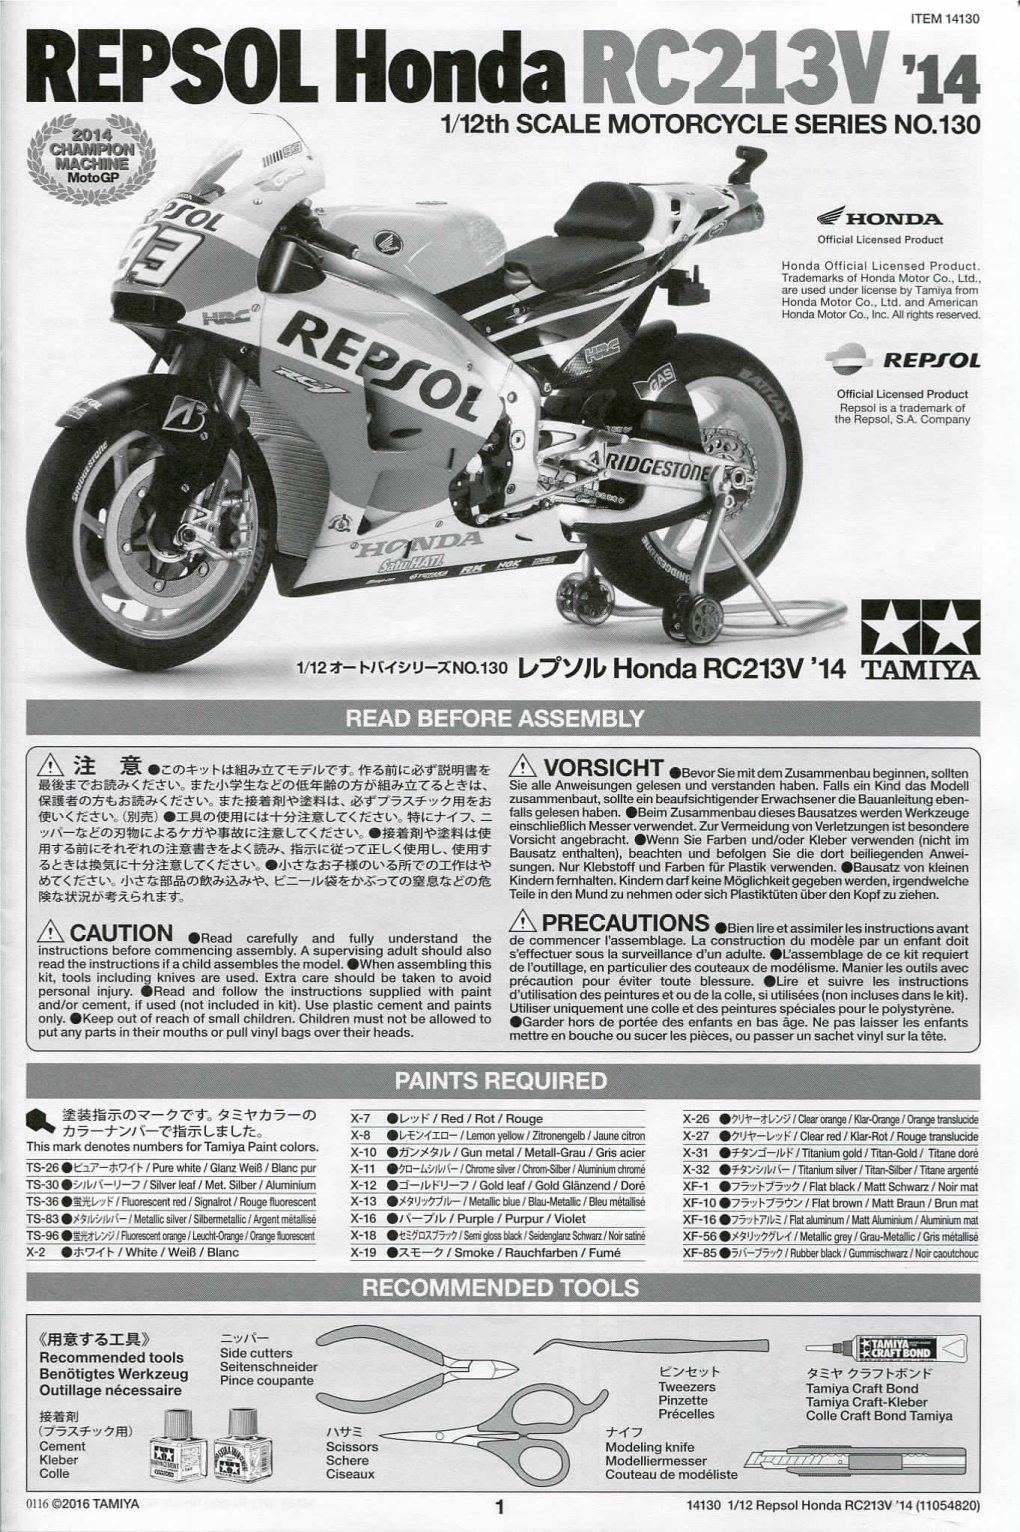 REPSOL Honda 14 1/12Th SCALE MOTORCYCLE SERIES NO.130